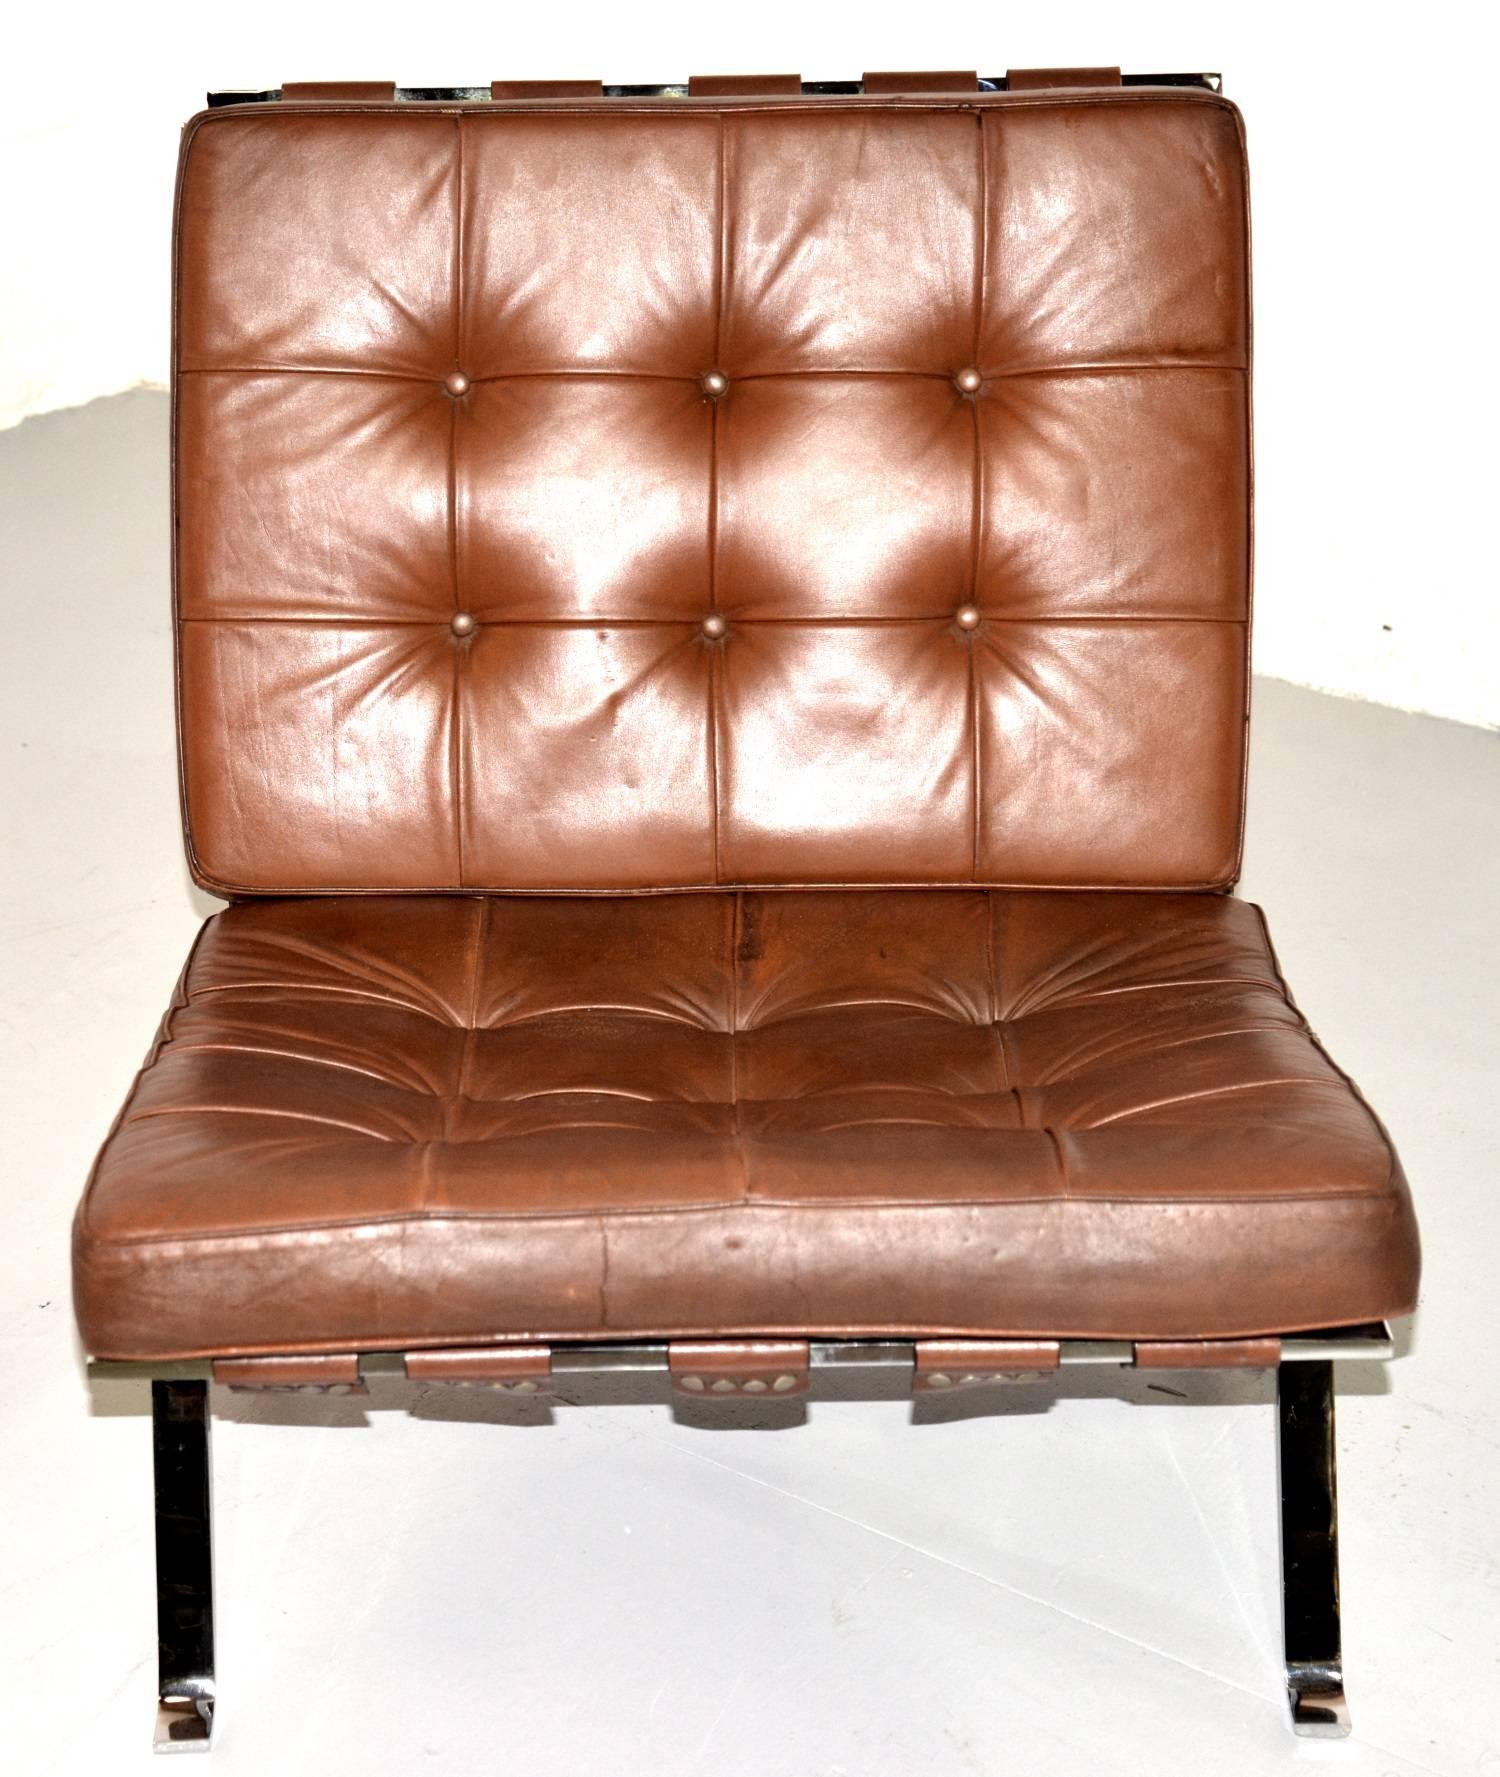 Vintage RH-301 Lounge Chair by Robert Haussmann for De Sede, Switzerland 1954 In Distressed Condition For Sale In Fen Drayton, Cambridgeshire